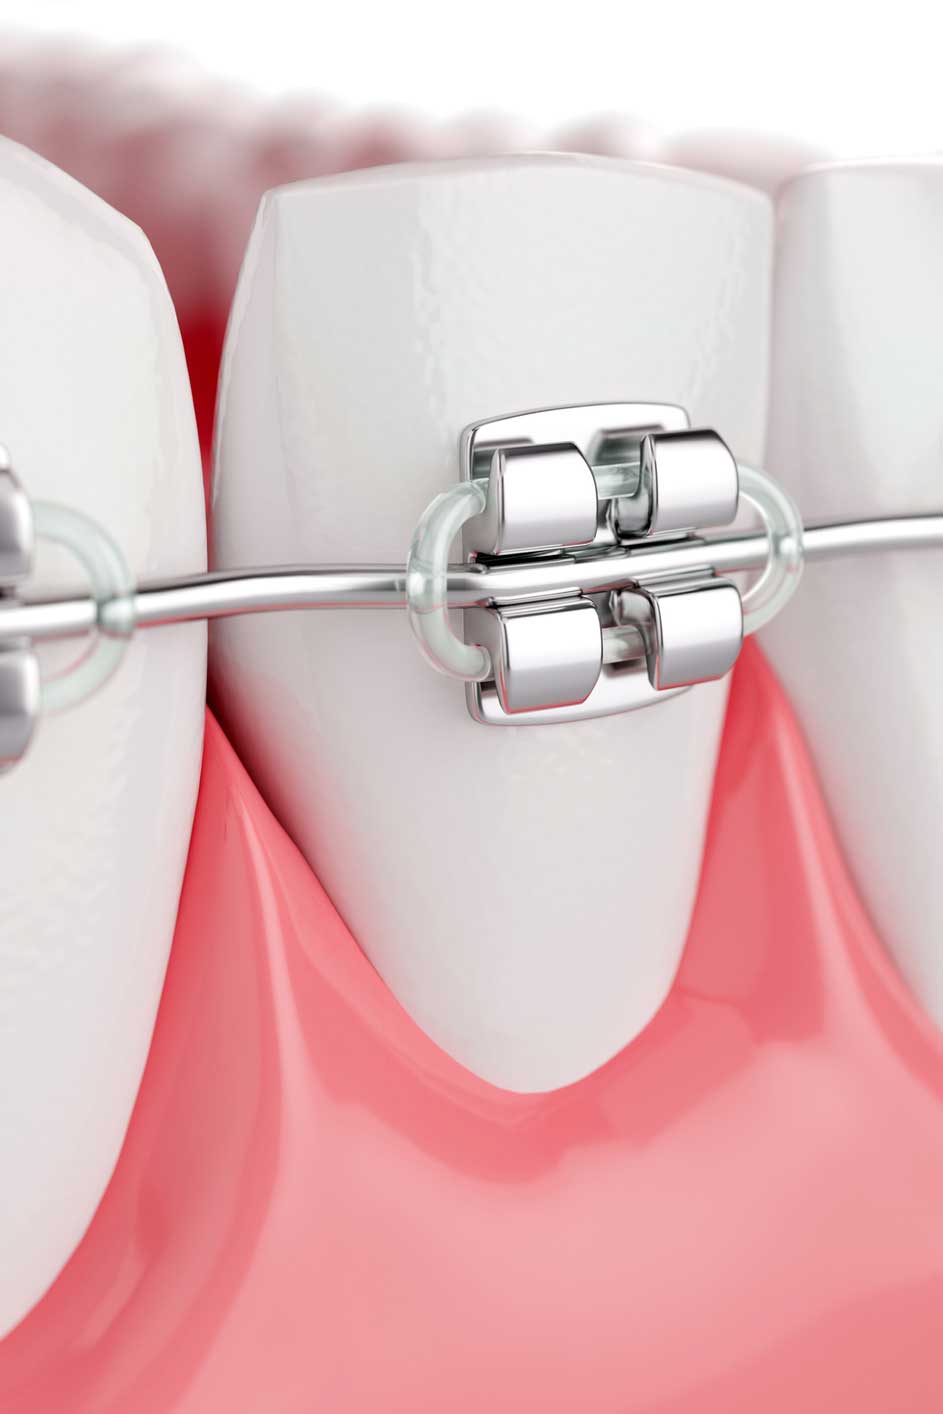 ortodoncia con brackets en Viladecans, brackets metálicos en Viladecans, ortodoncistas en Viladecans.